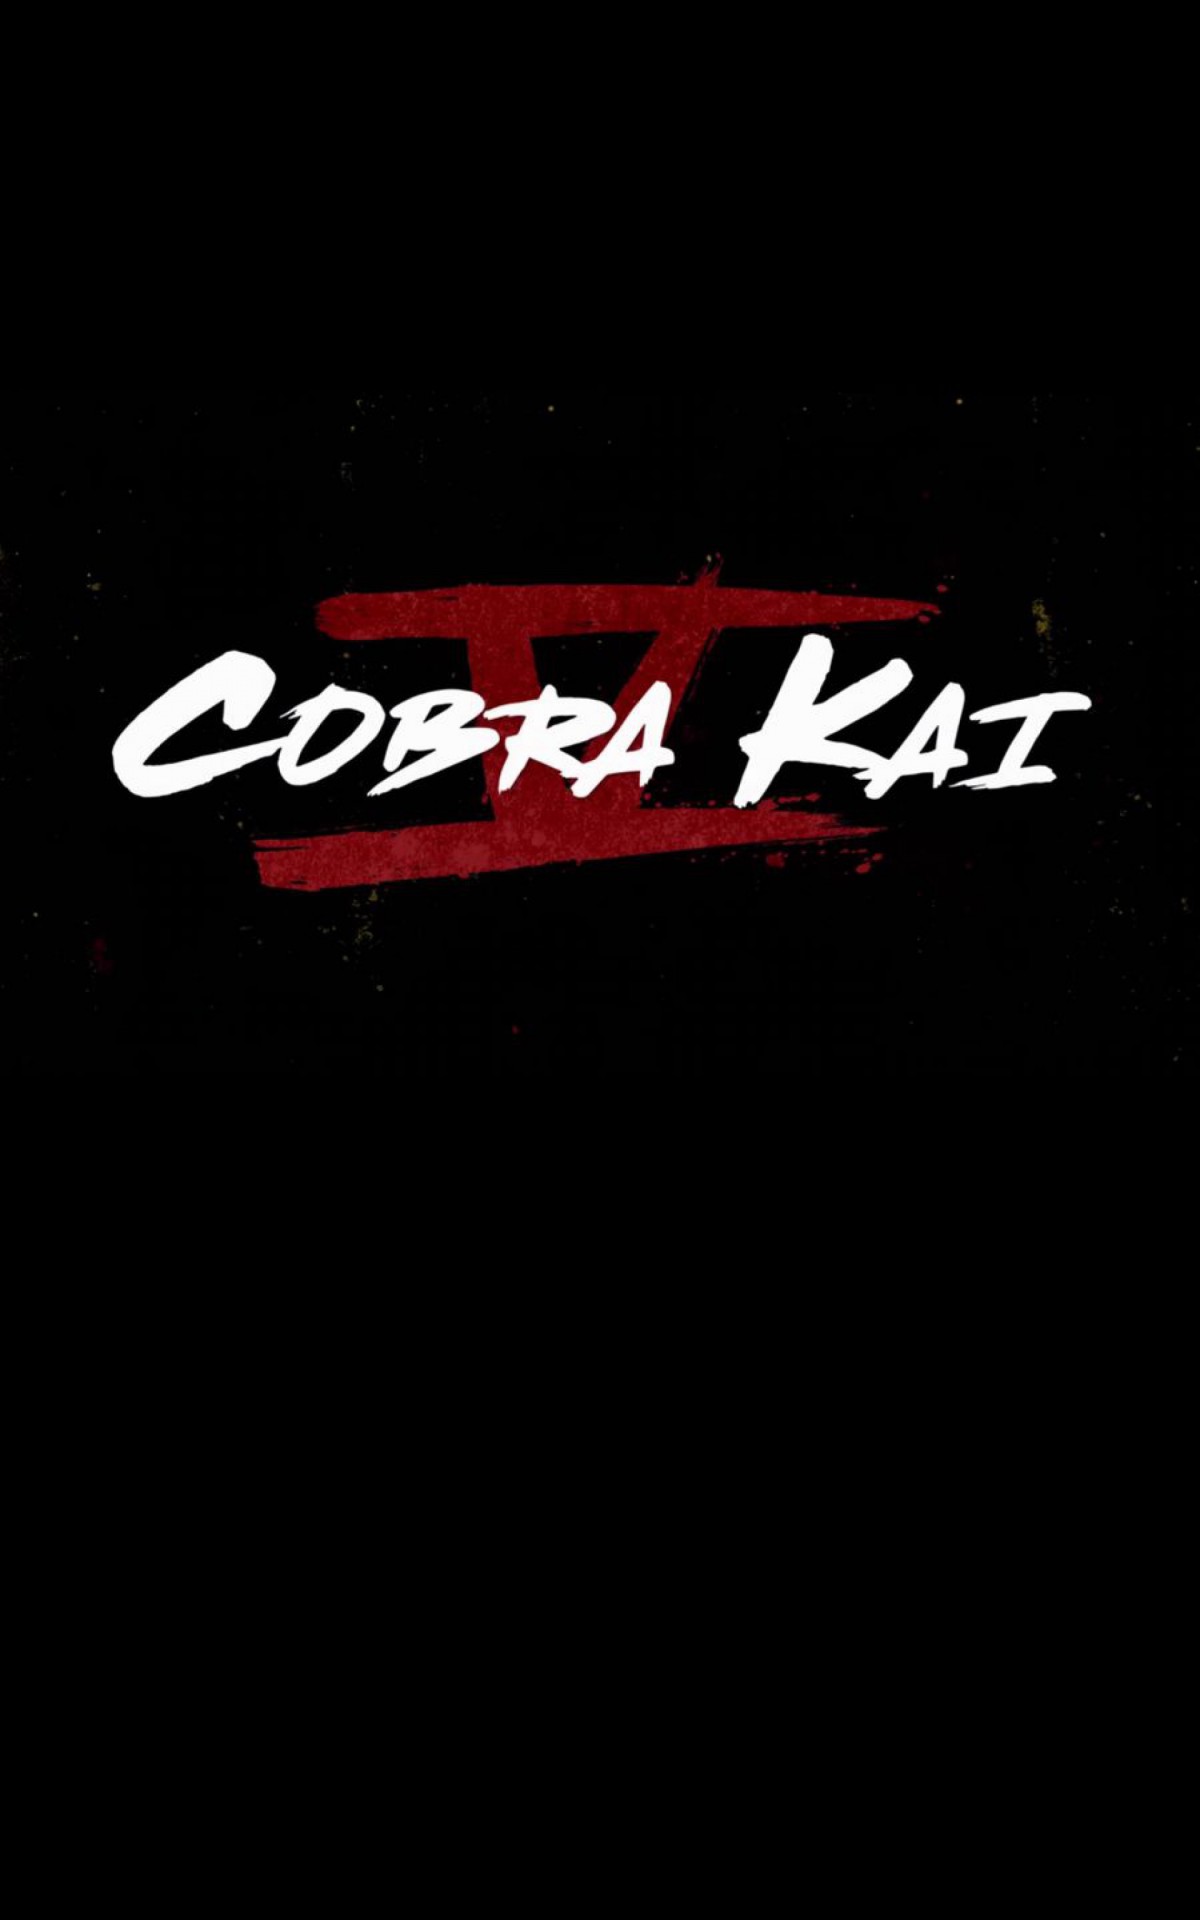 Cobra Kai leva a rivalidade de Karatê Kid para os games; veja o trailer -  Canaltech